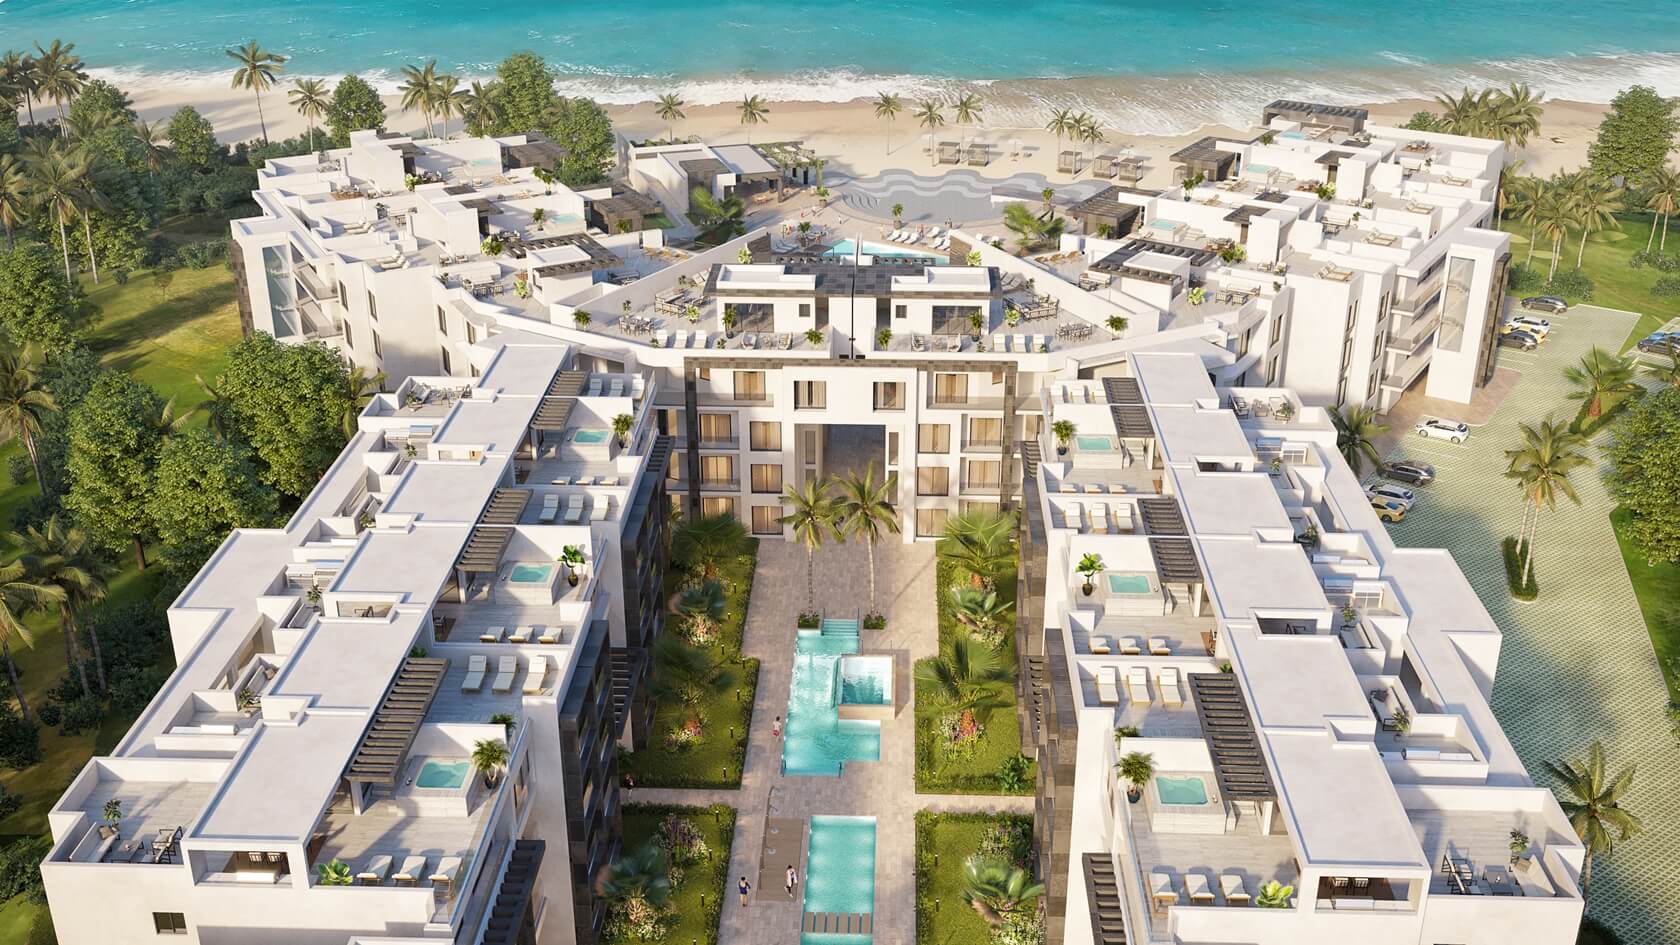 Ultimate Level of luxury, Ocean View Condos With Private Beach, Bavaro. Dominican Republic